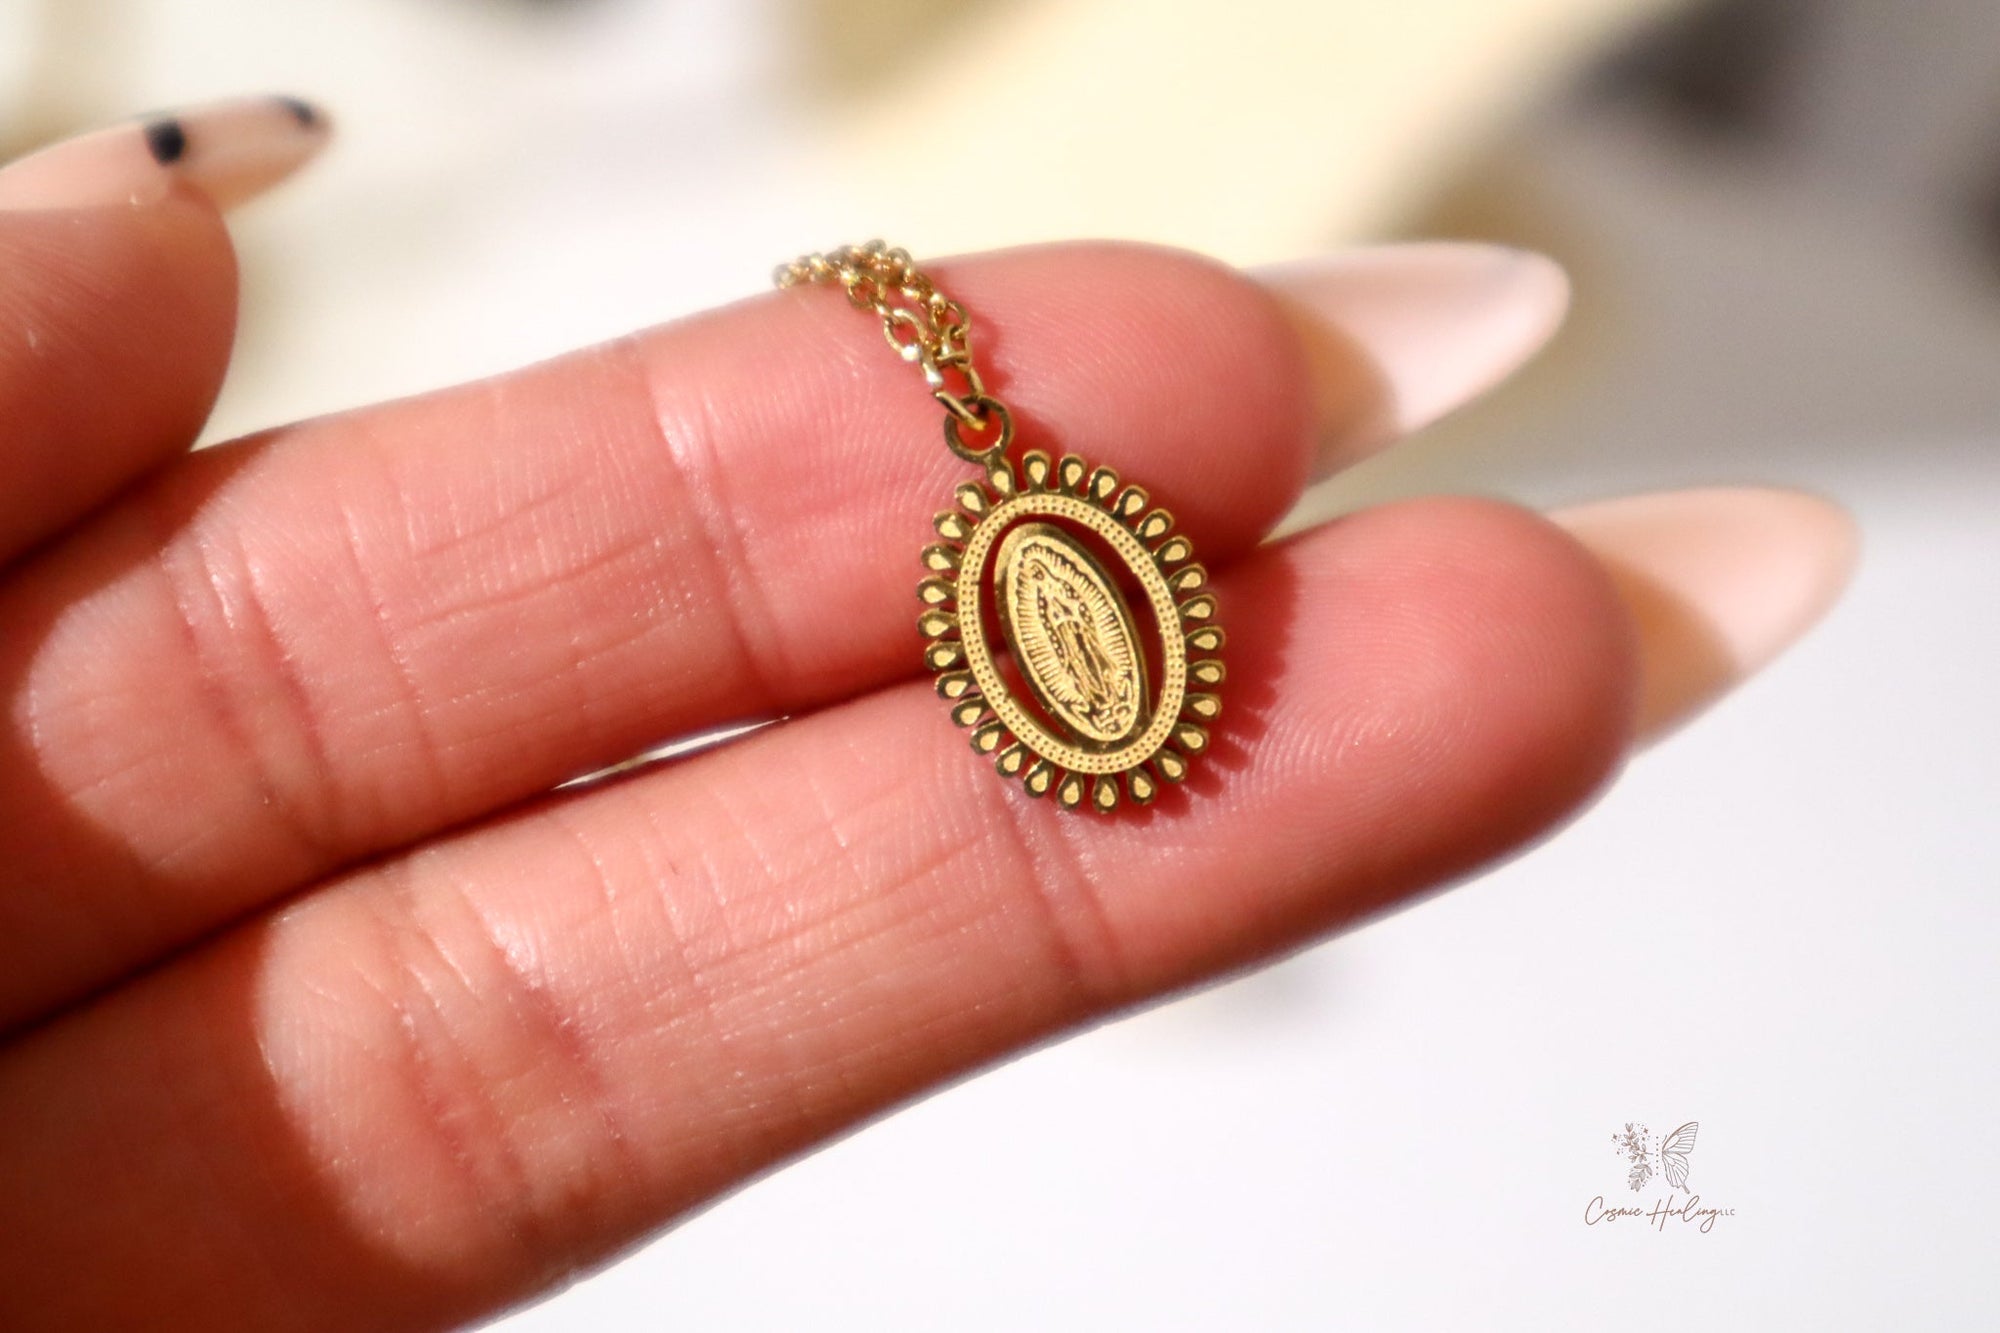 Scalloped Edge Virgen de Guadalupe Necklace (Gold) - Shop Cosmic Healing